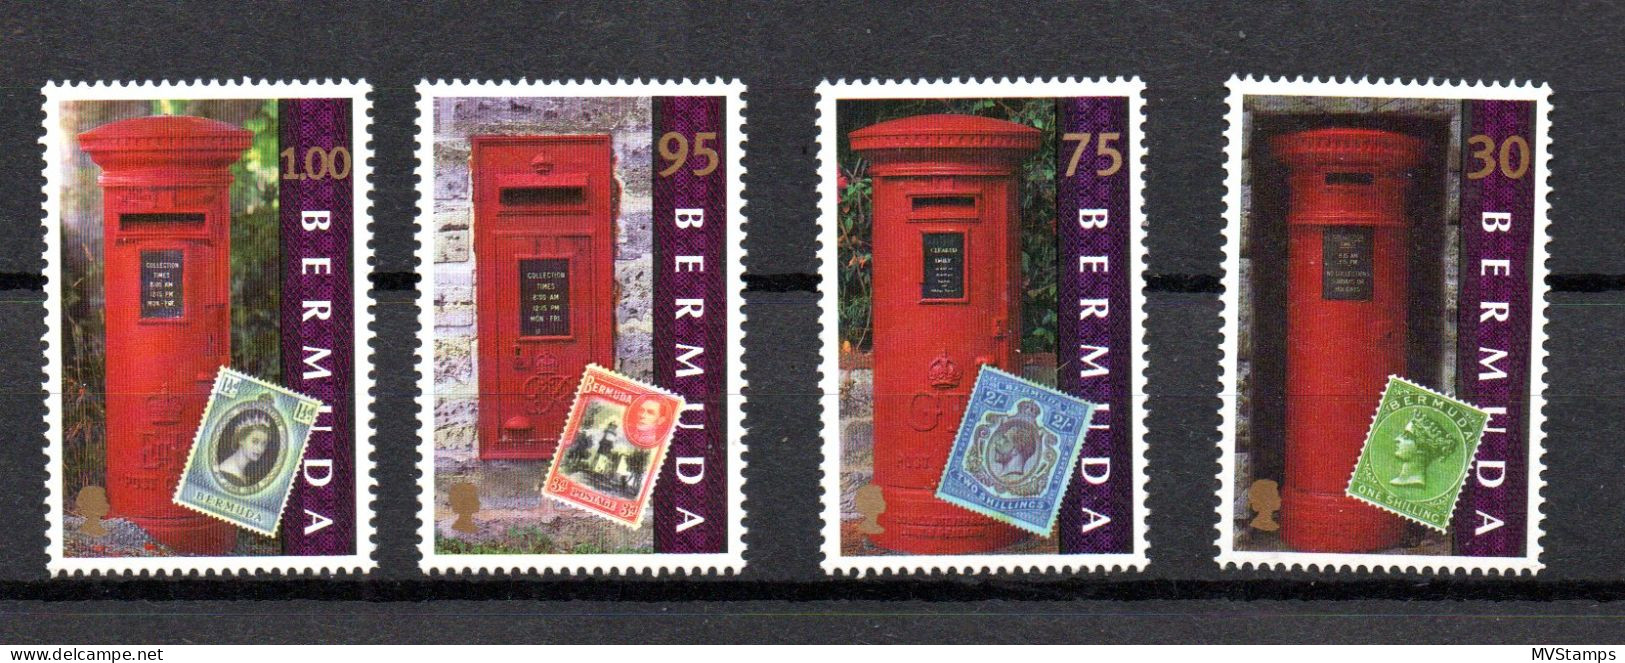 Bermuda 1999 Set Postboxes/UPU Stamps (Michel 768/71) MNH - Bermudas